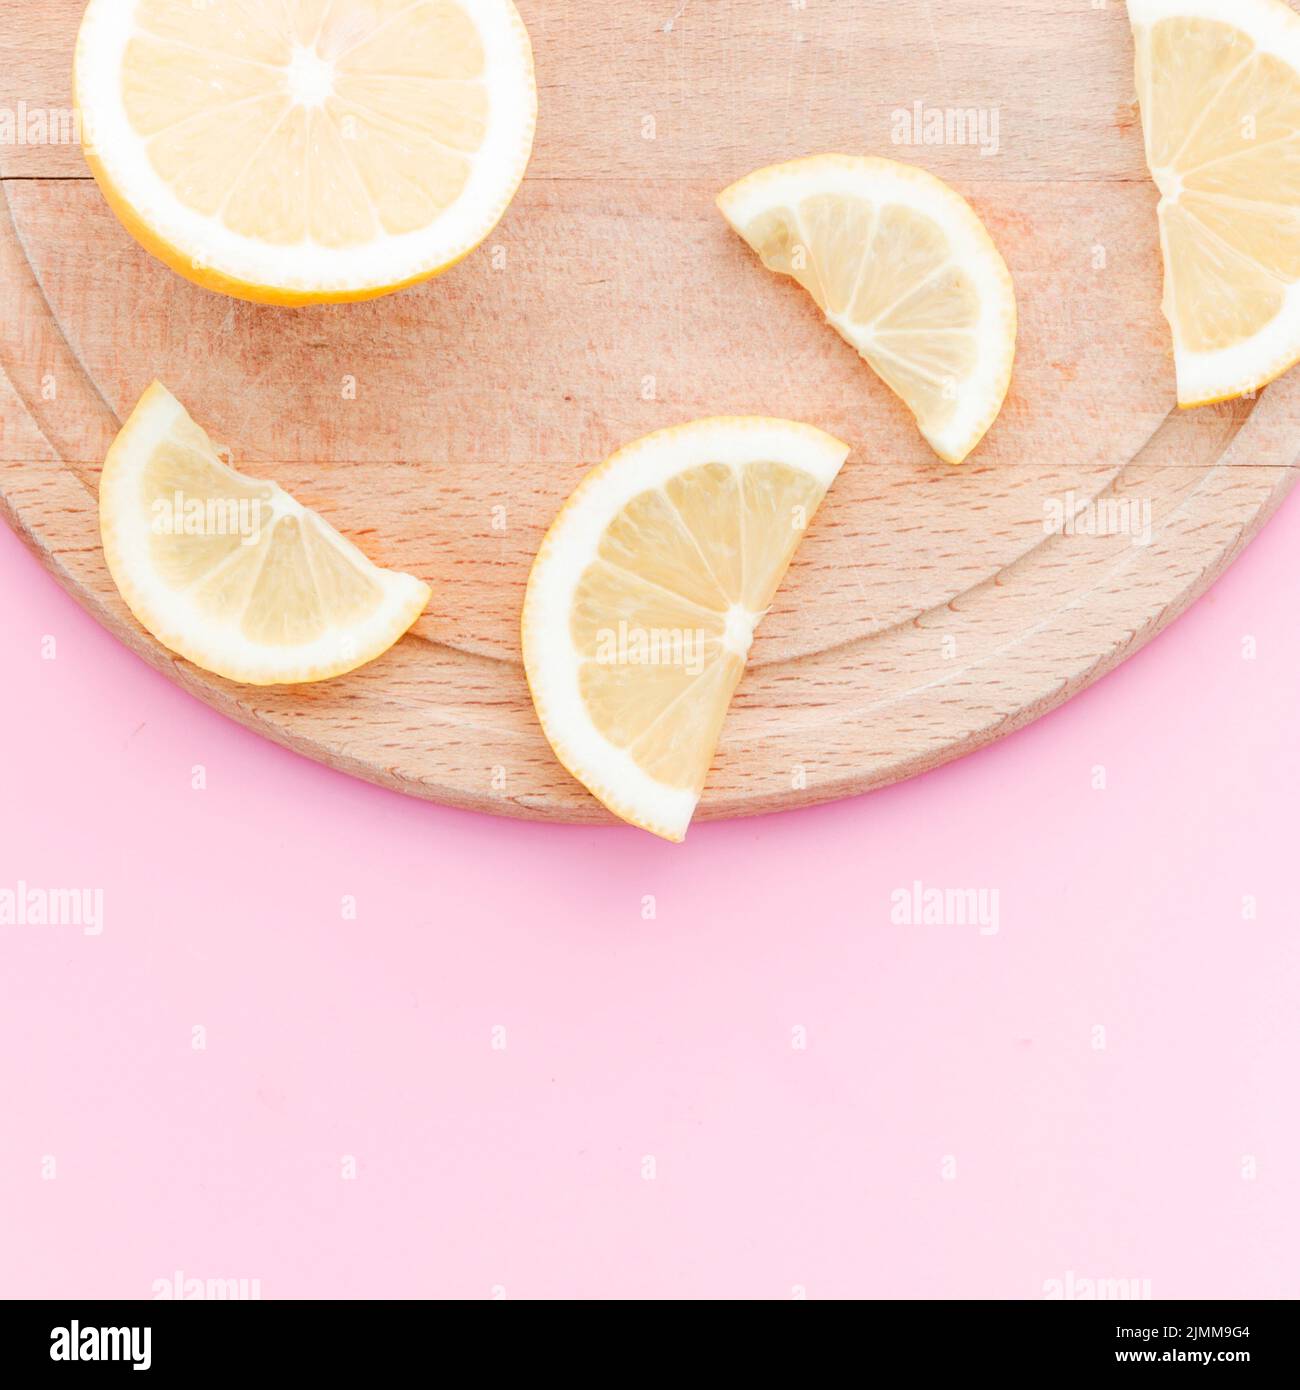 Lemon slices cutting board Stock Photo